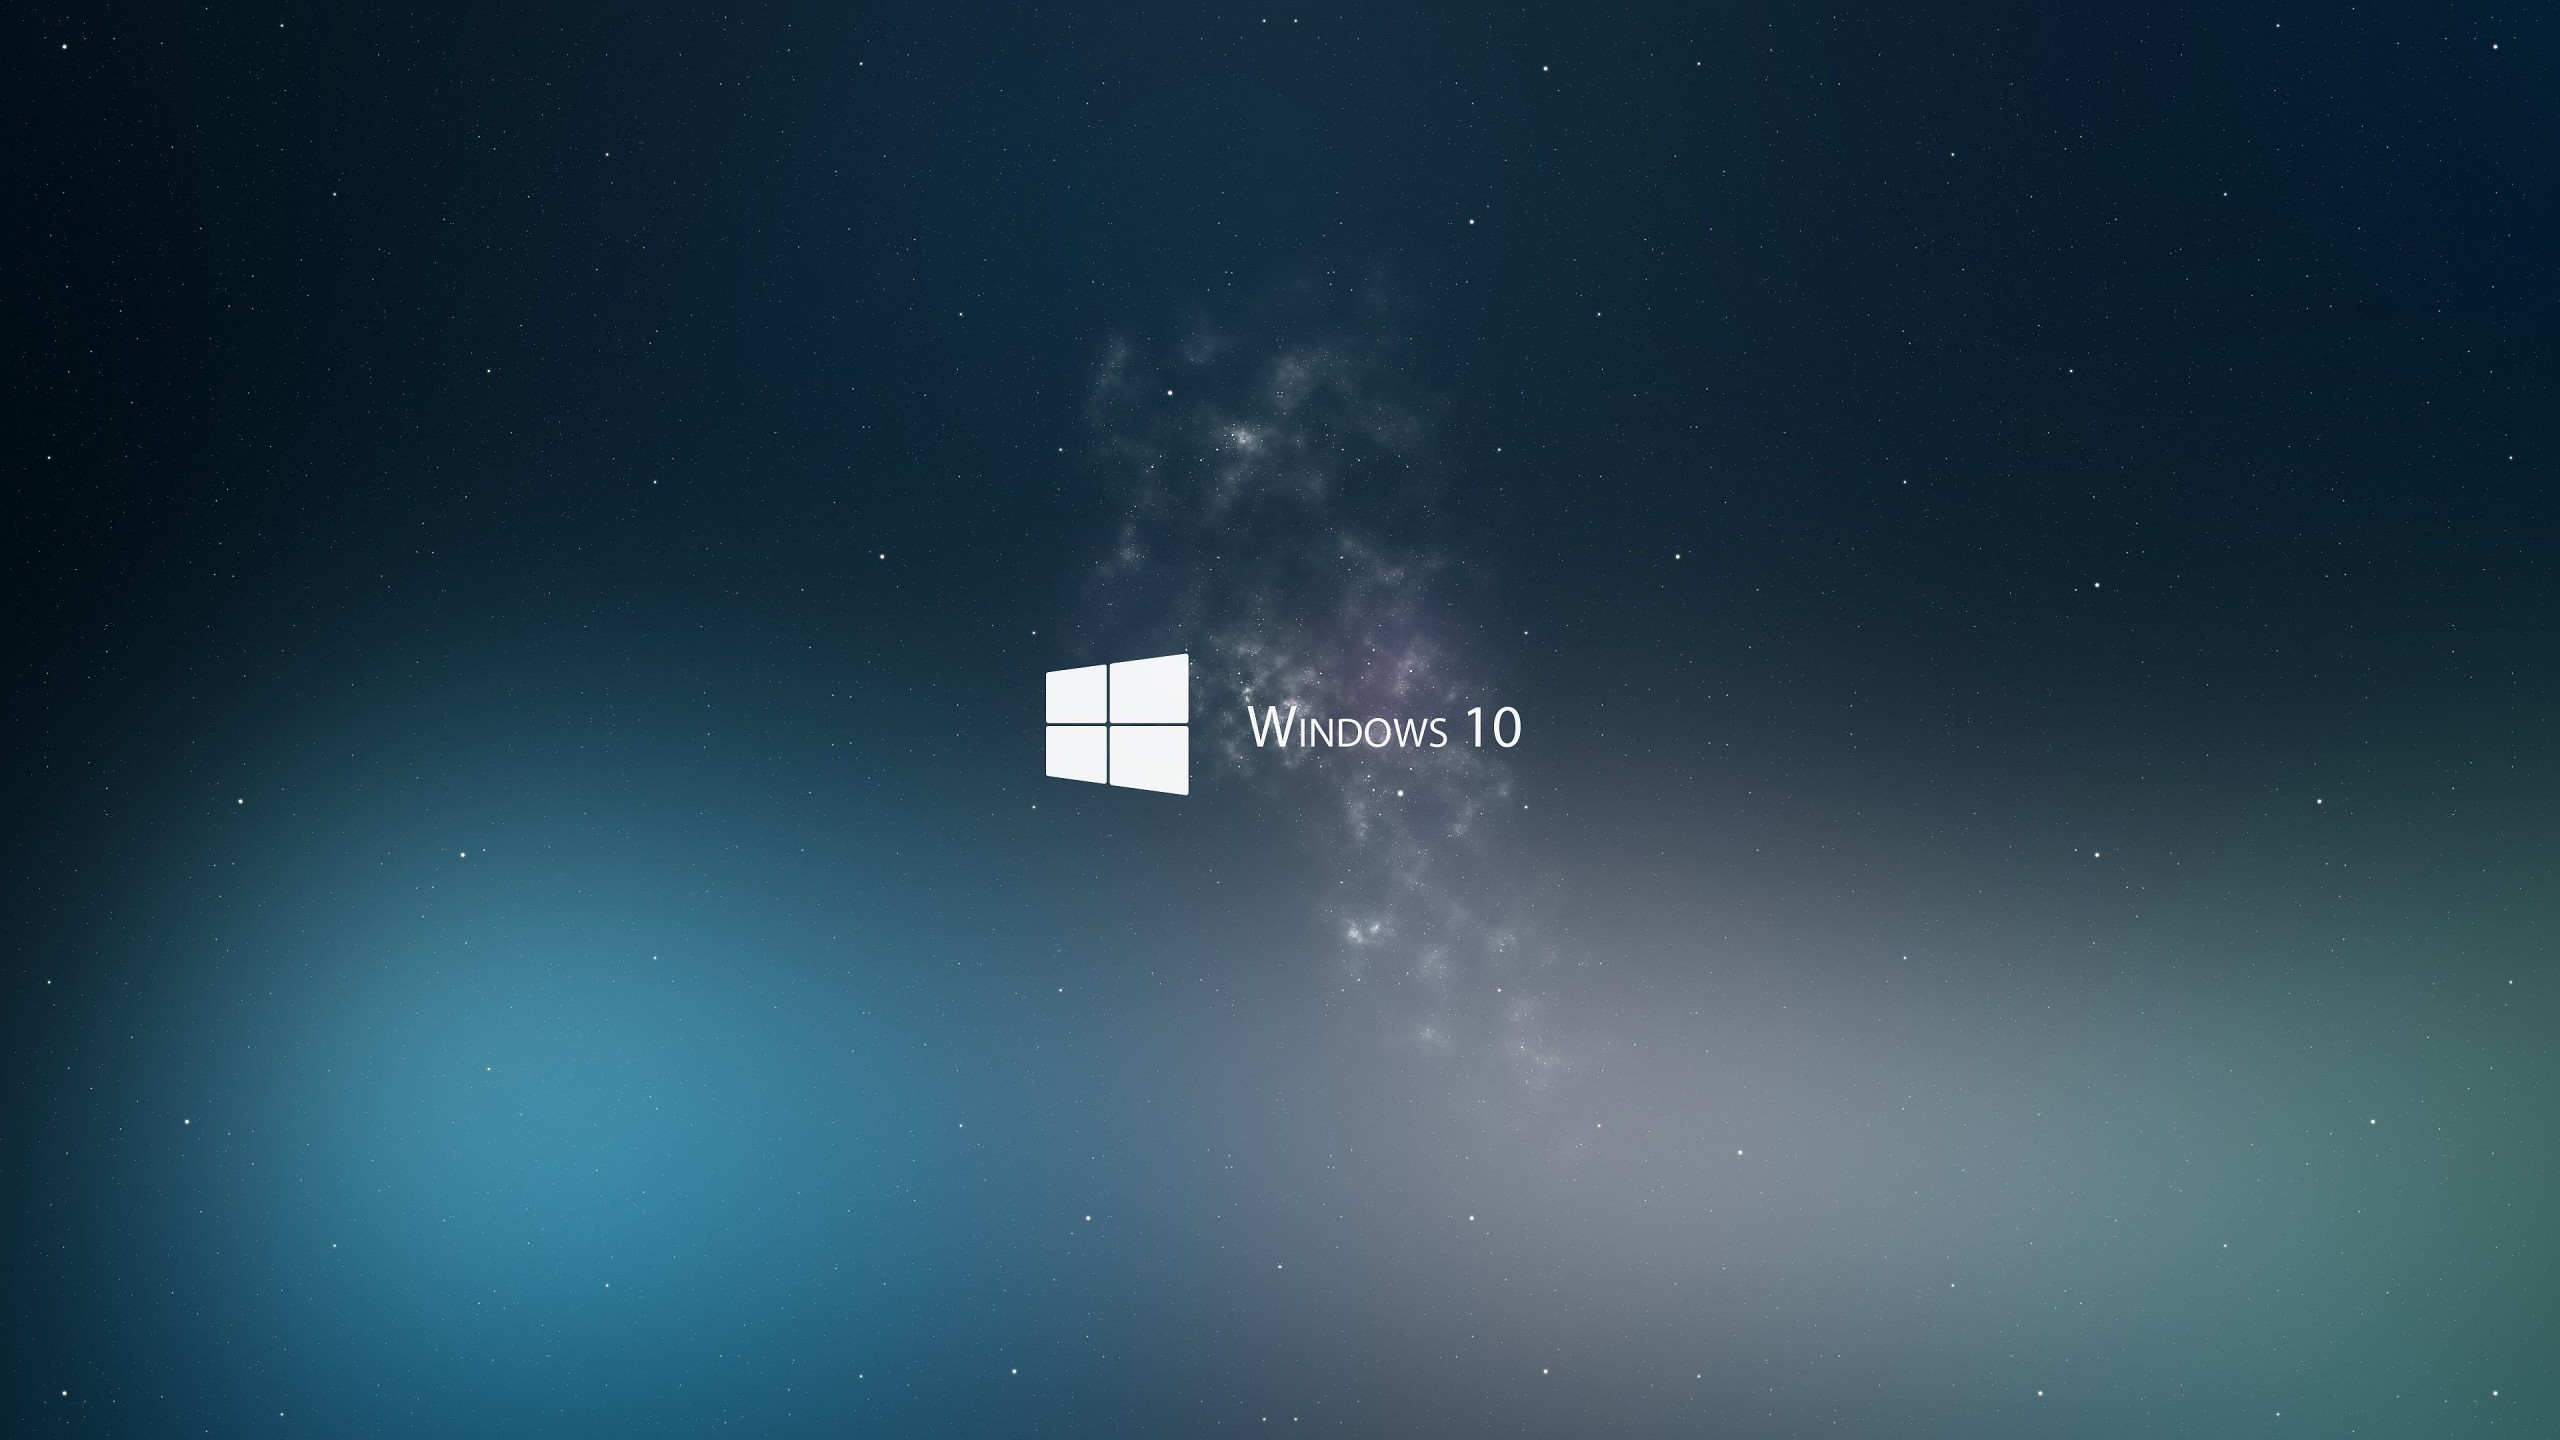 Windows 10 Wallpaper for Desktop 2560x1440